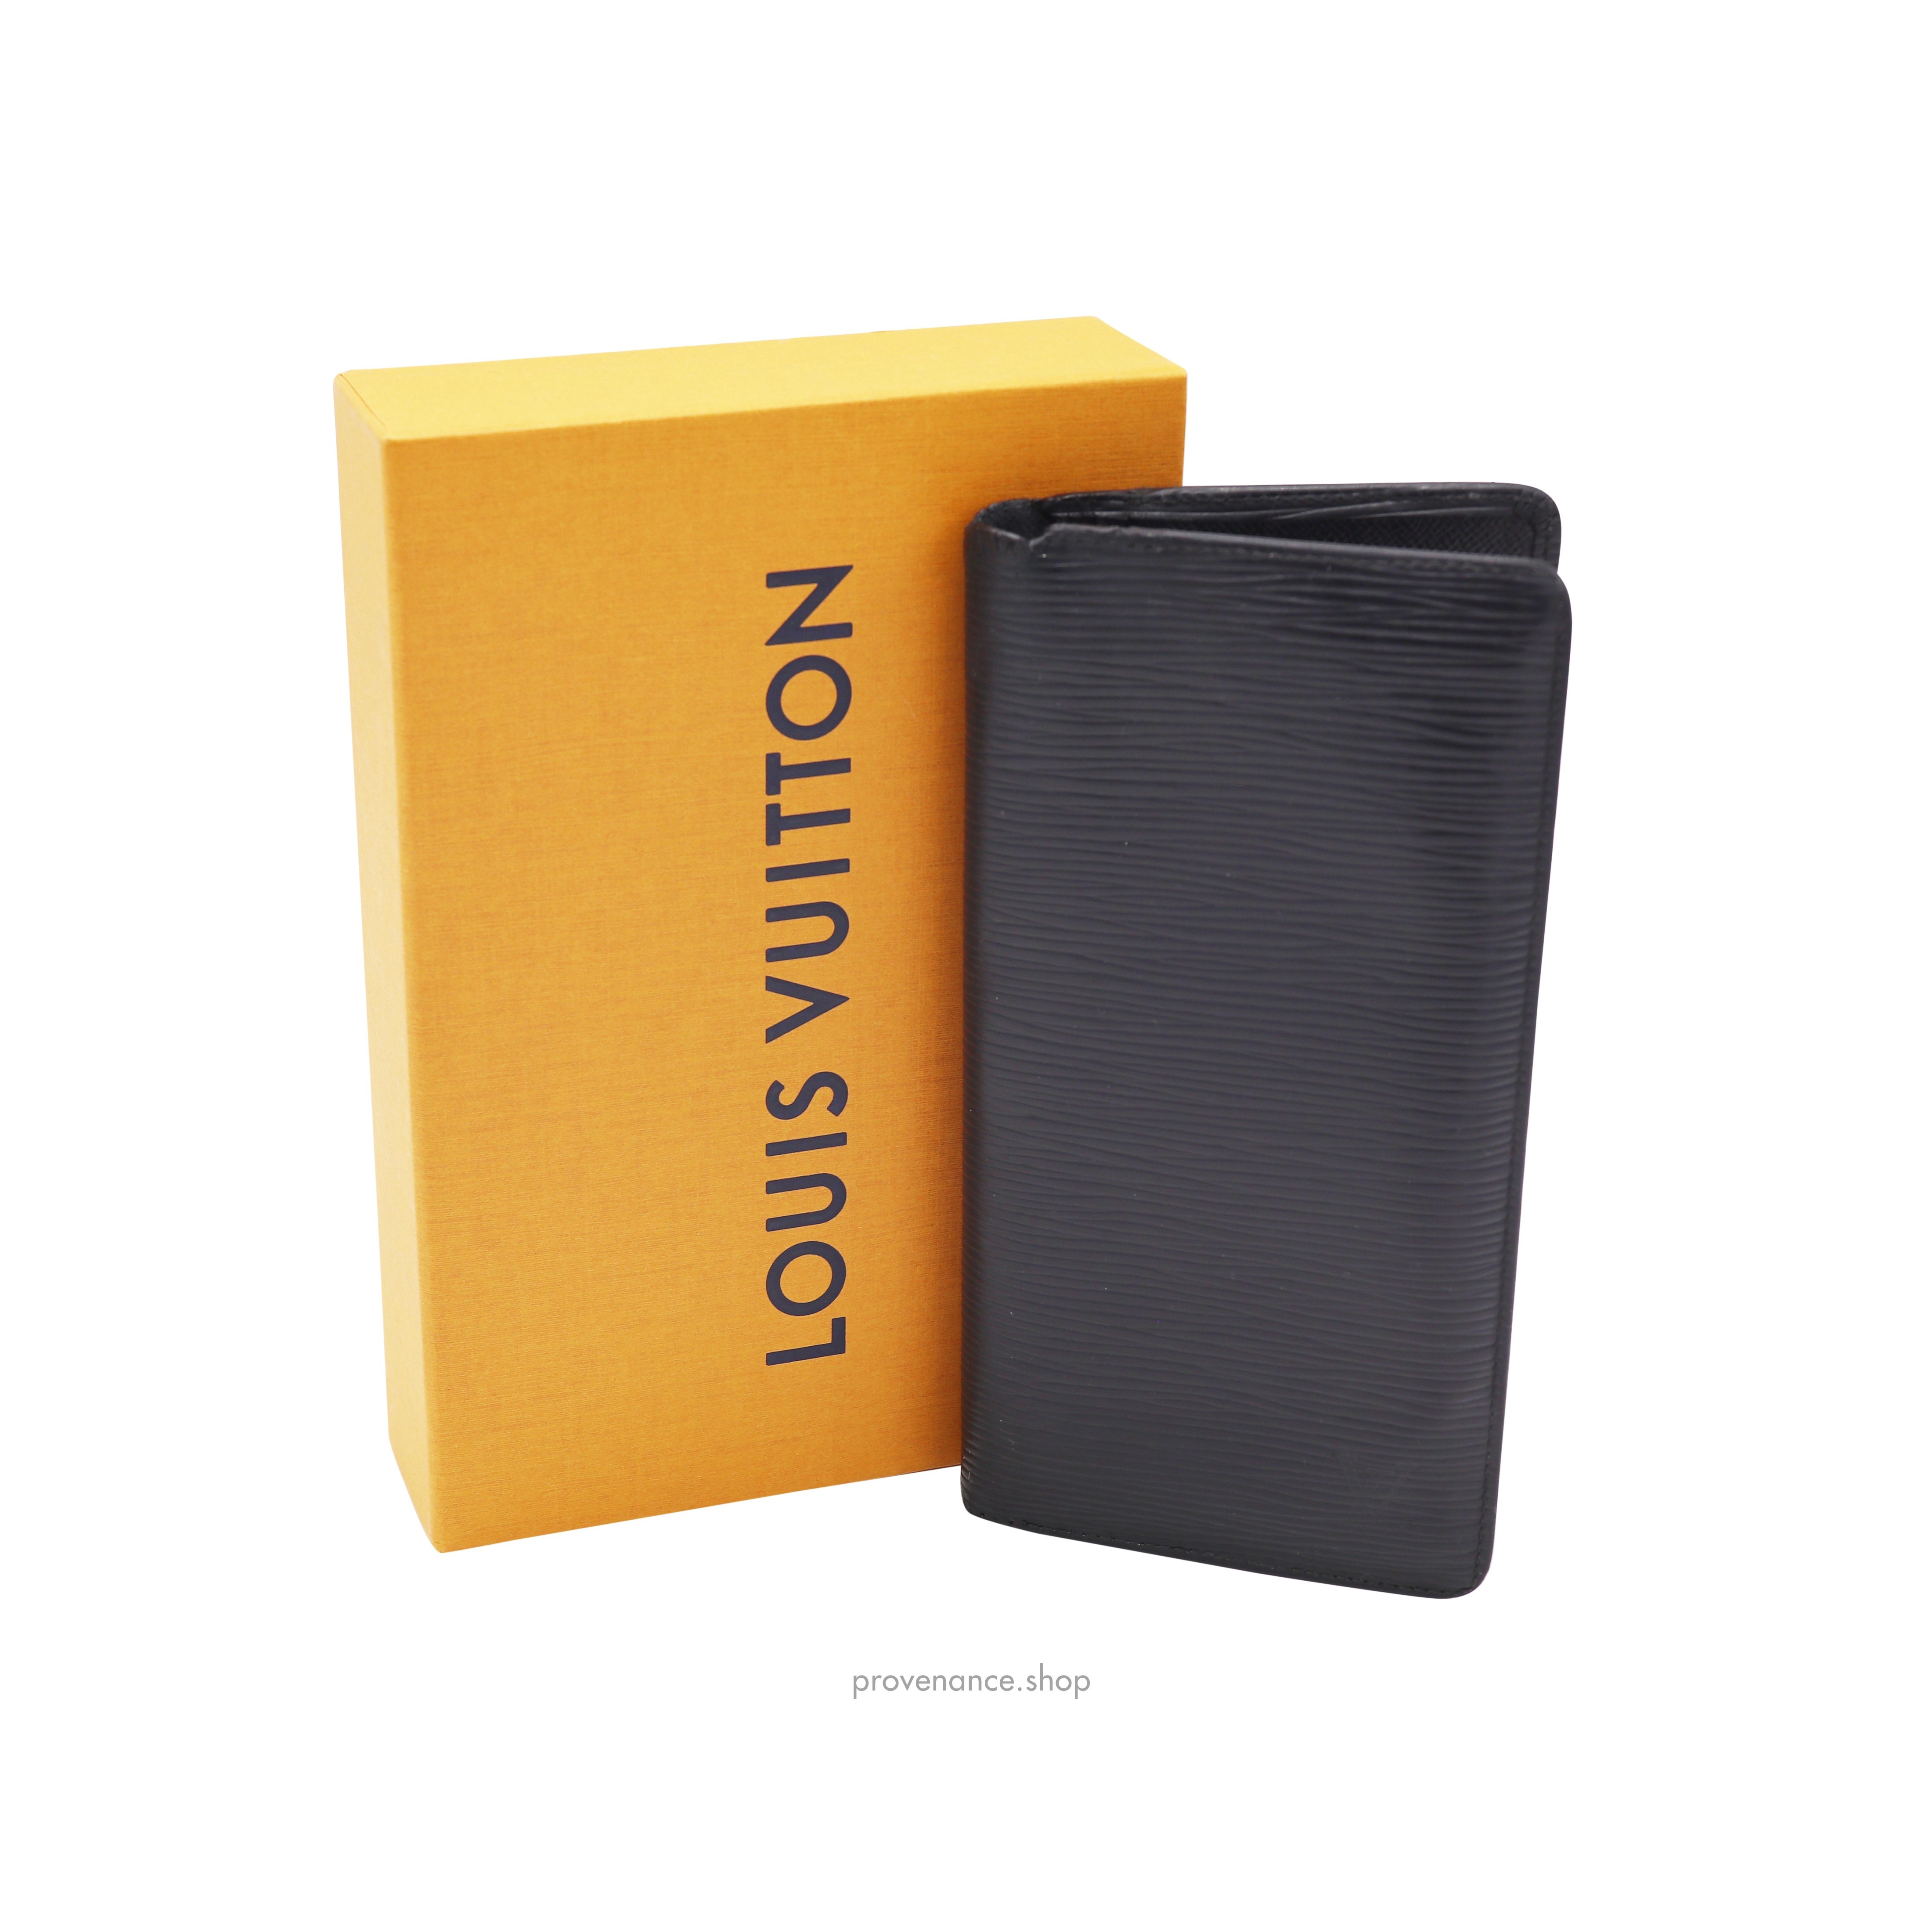 Louis Vuitton Multiple Wallet (3 Card Slot) Epi Black in Epi